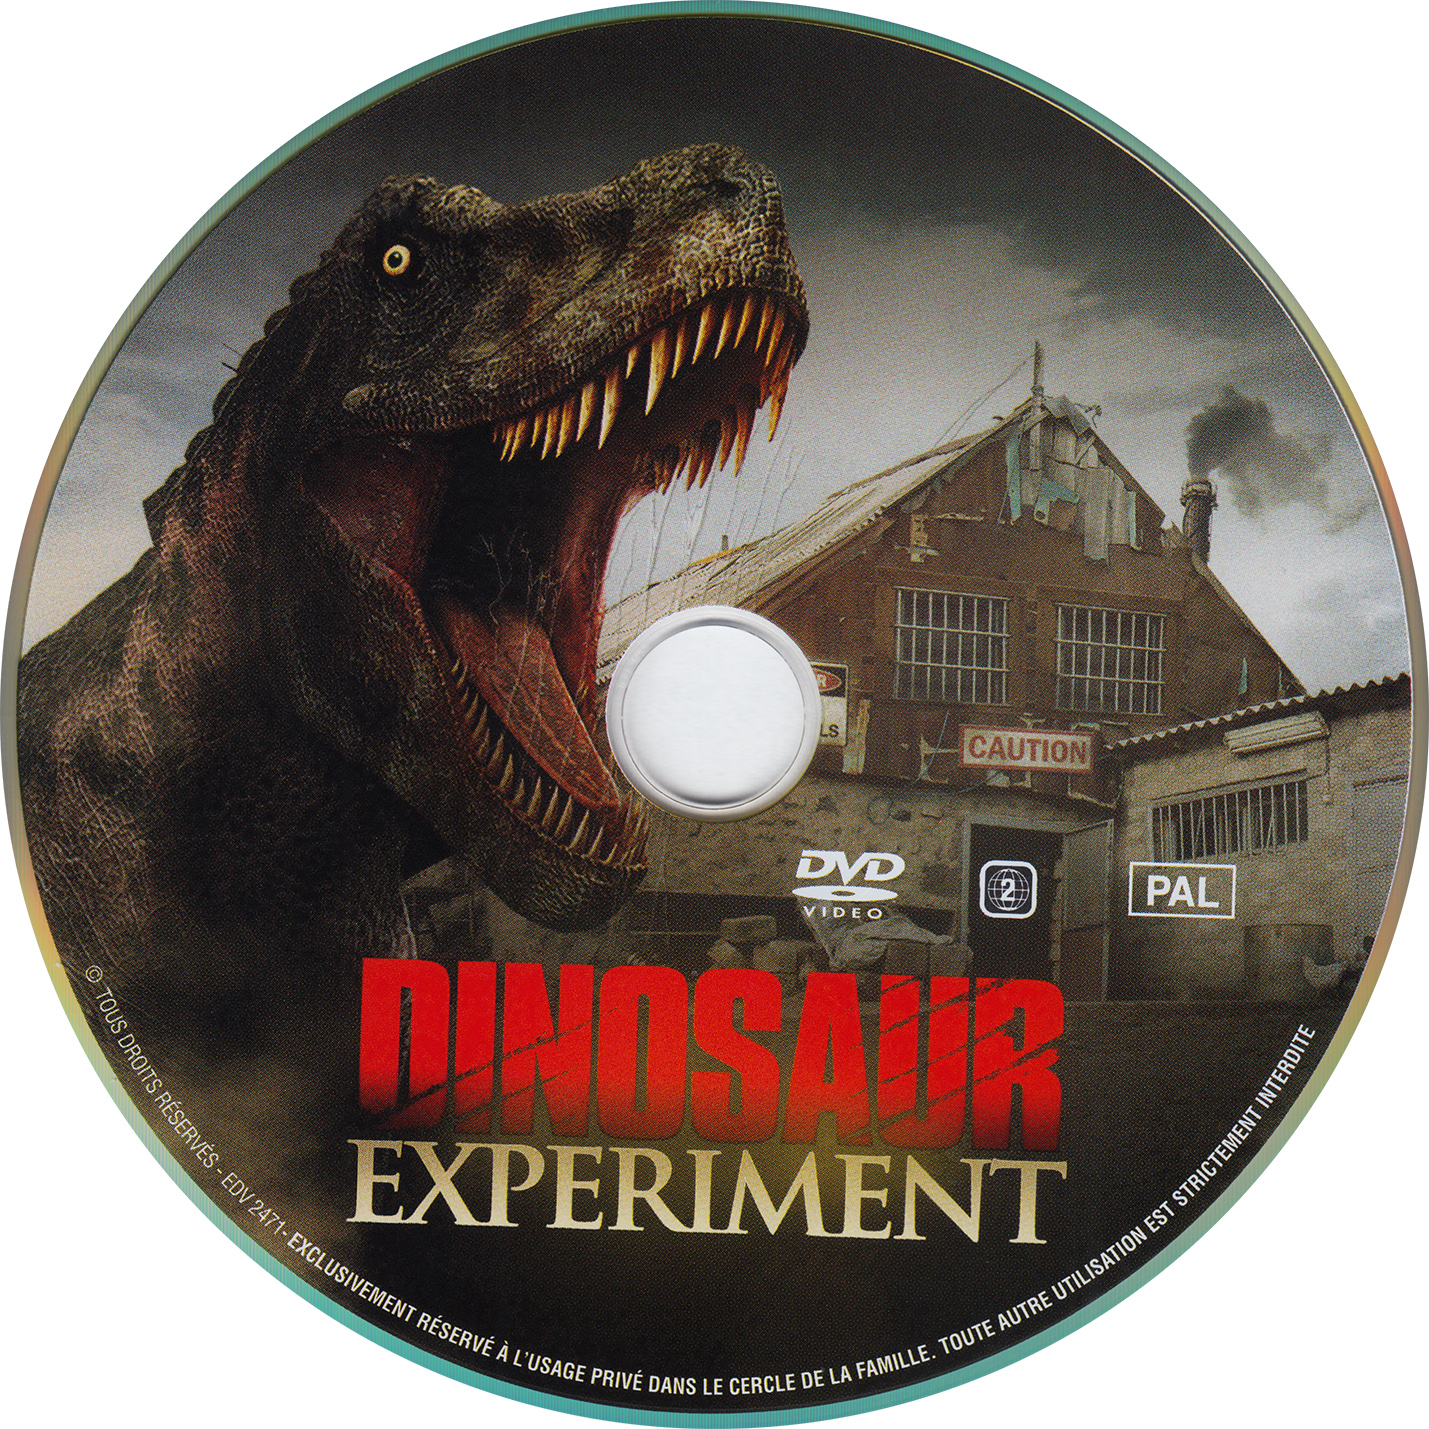 Dinosaur experiment